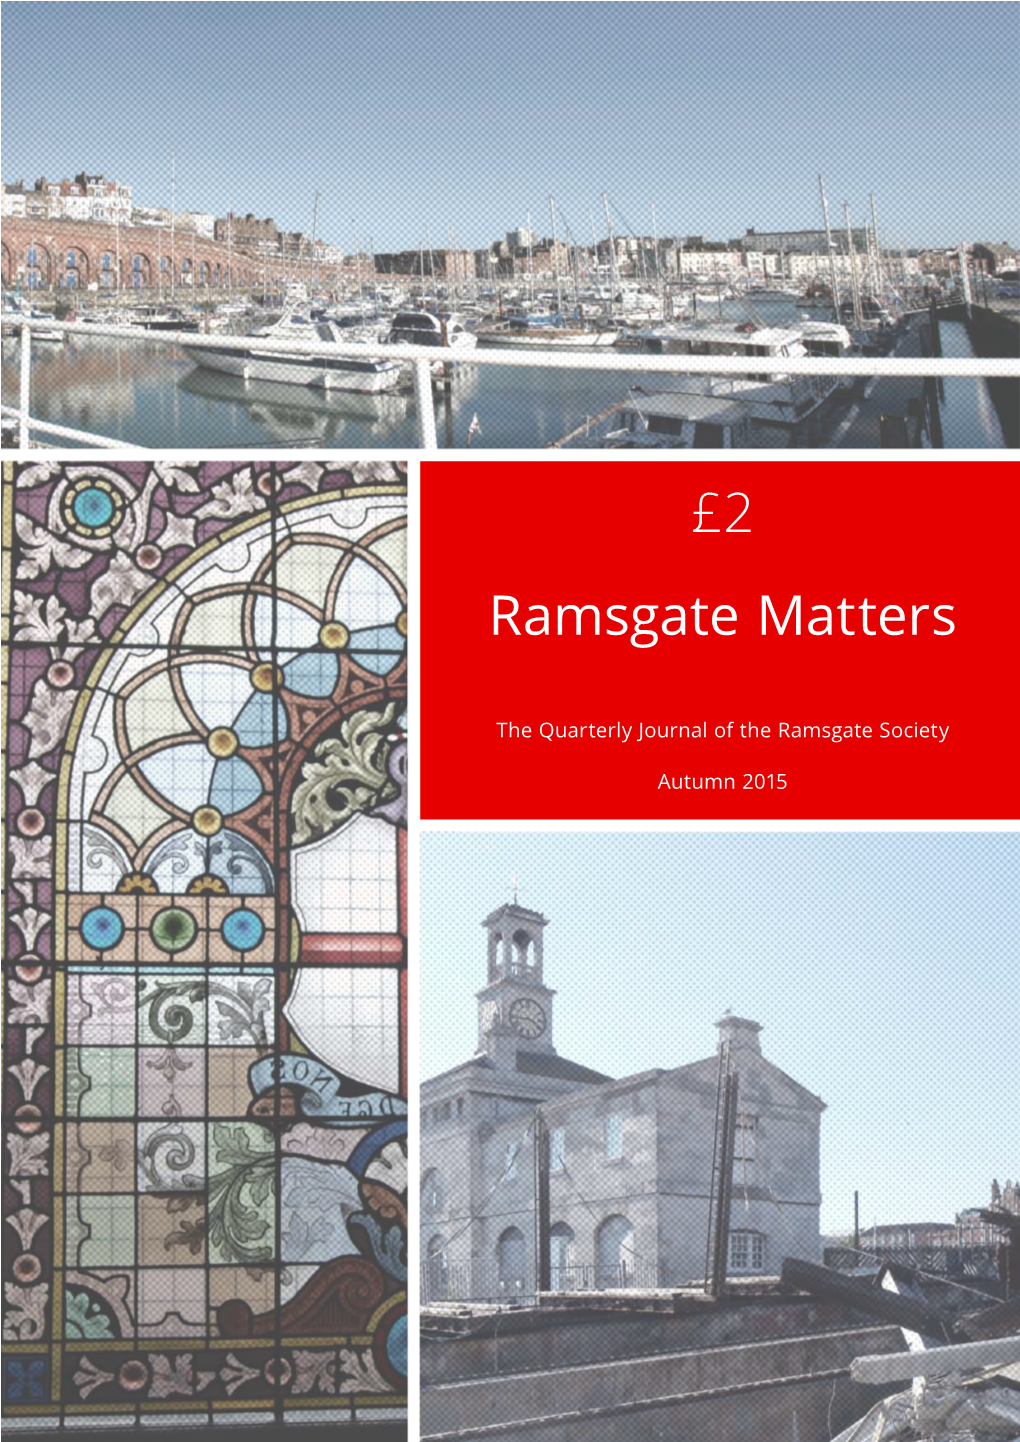 £2 Ramsgate Matters